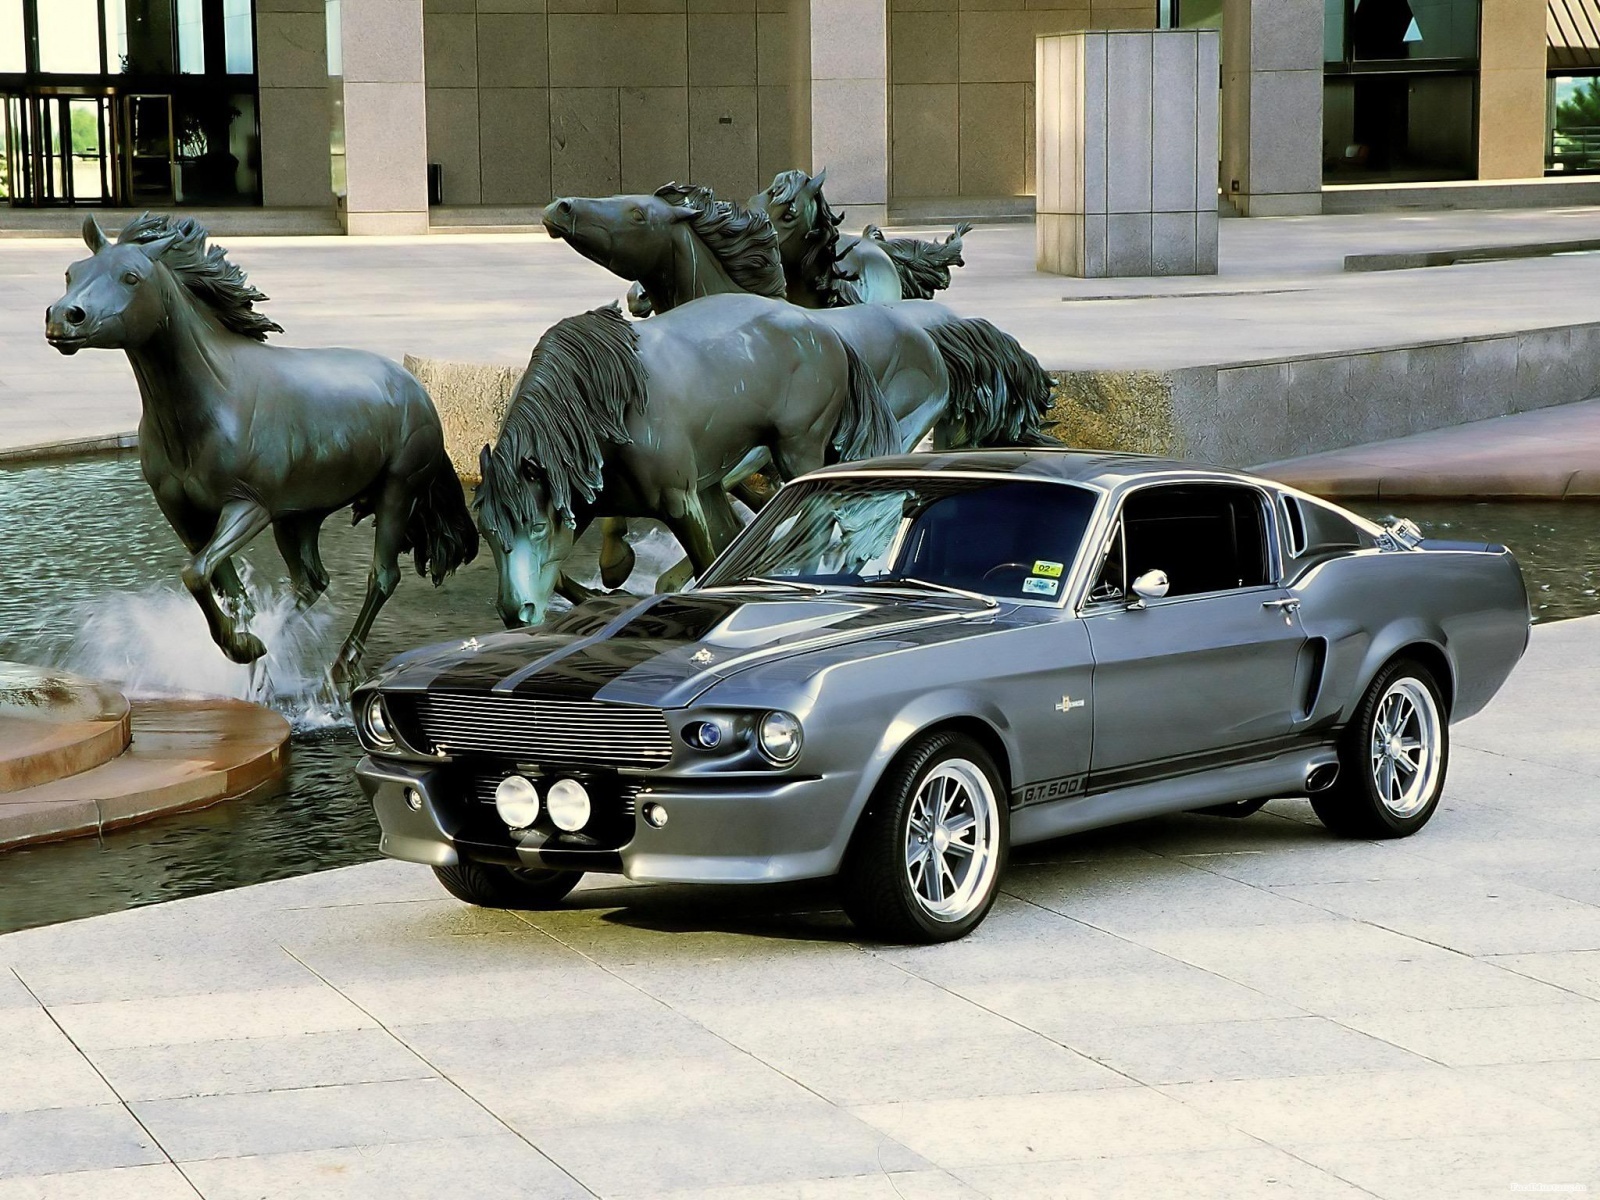 Ford Mustang Shelby Gt500 Puter Wallpaper Desktop Background